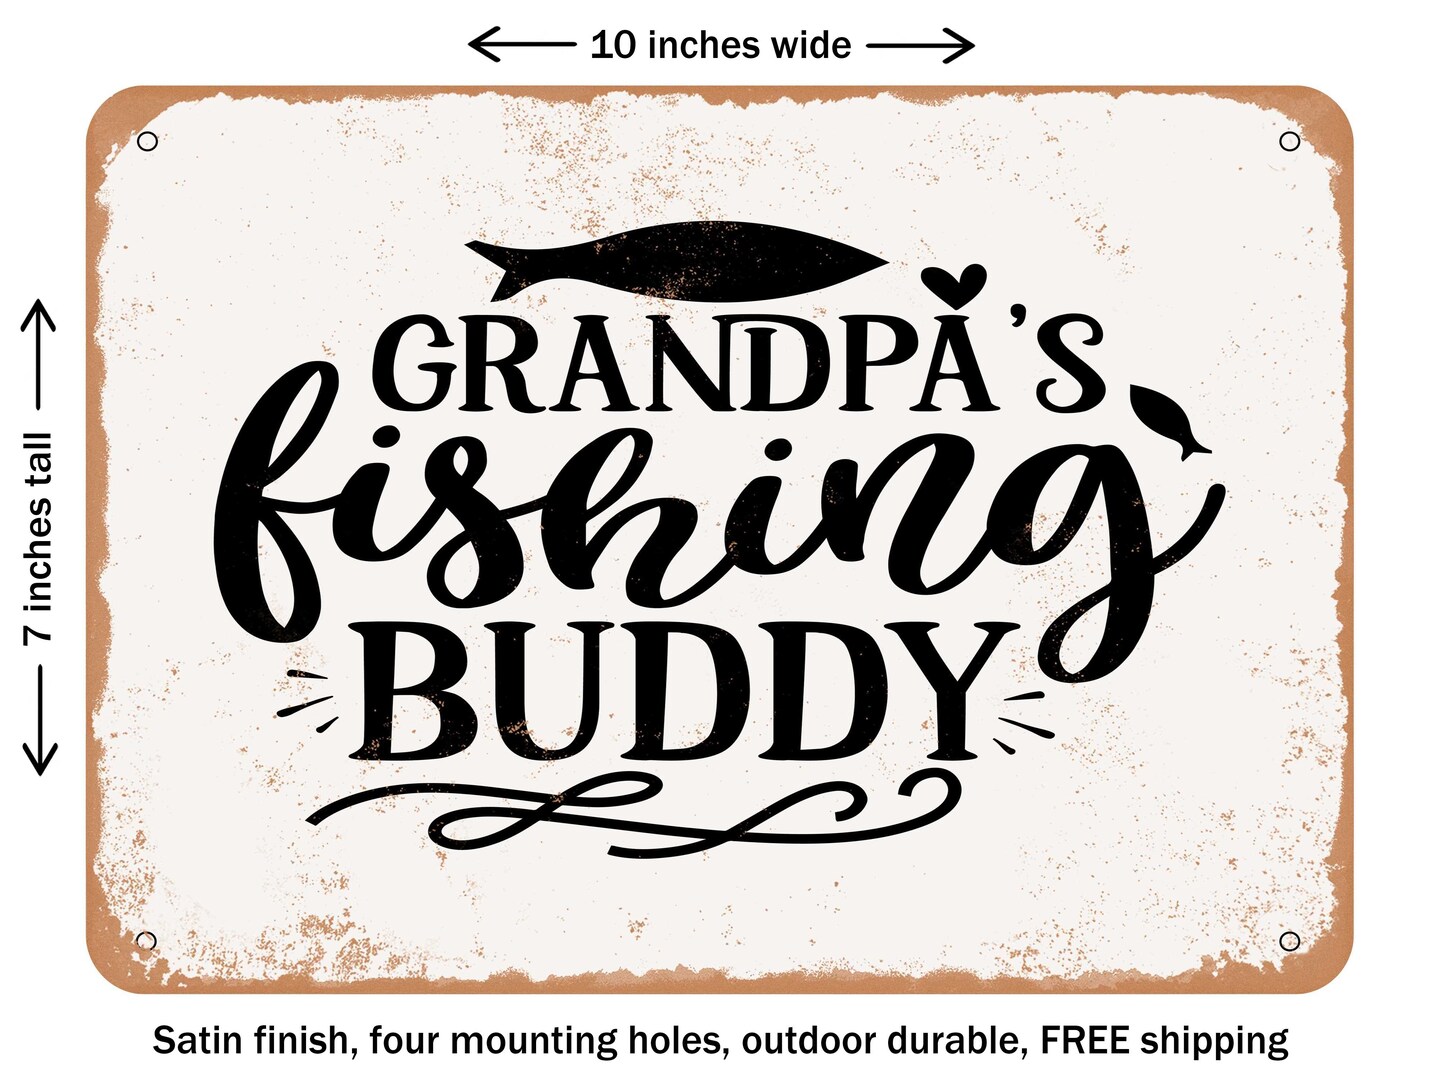 DECORATIVE METAL SIGN - Grandpas Fishing Buddy - Vintage Rusty Look